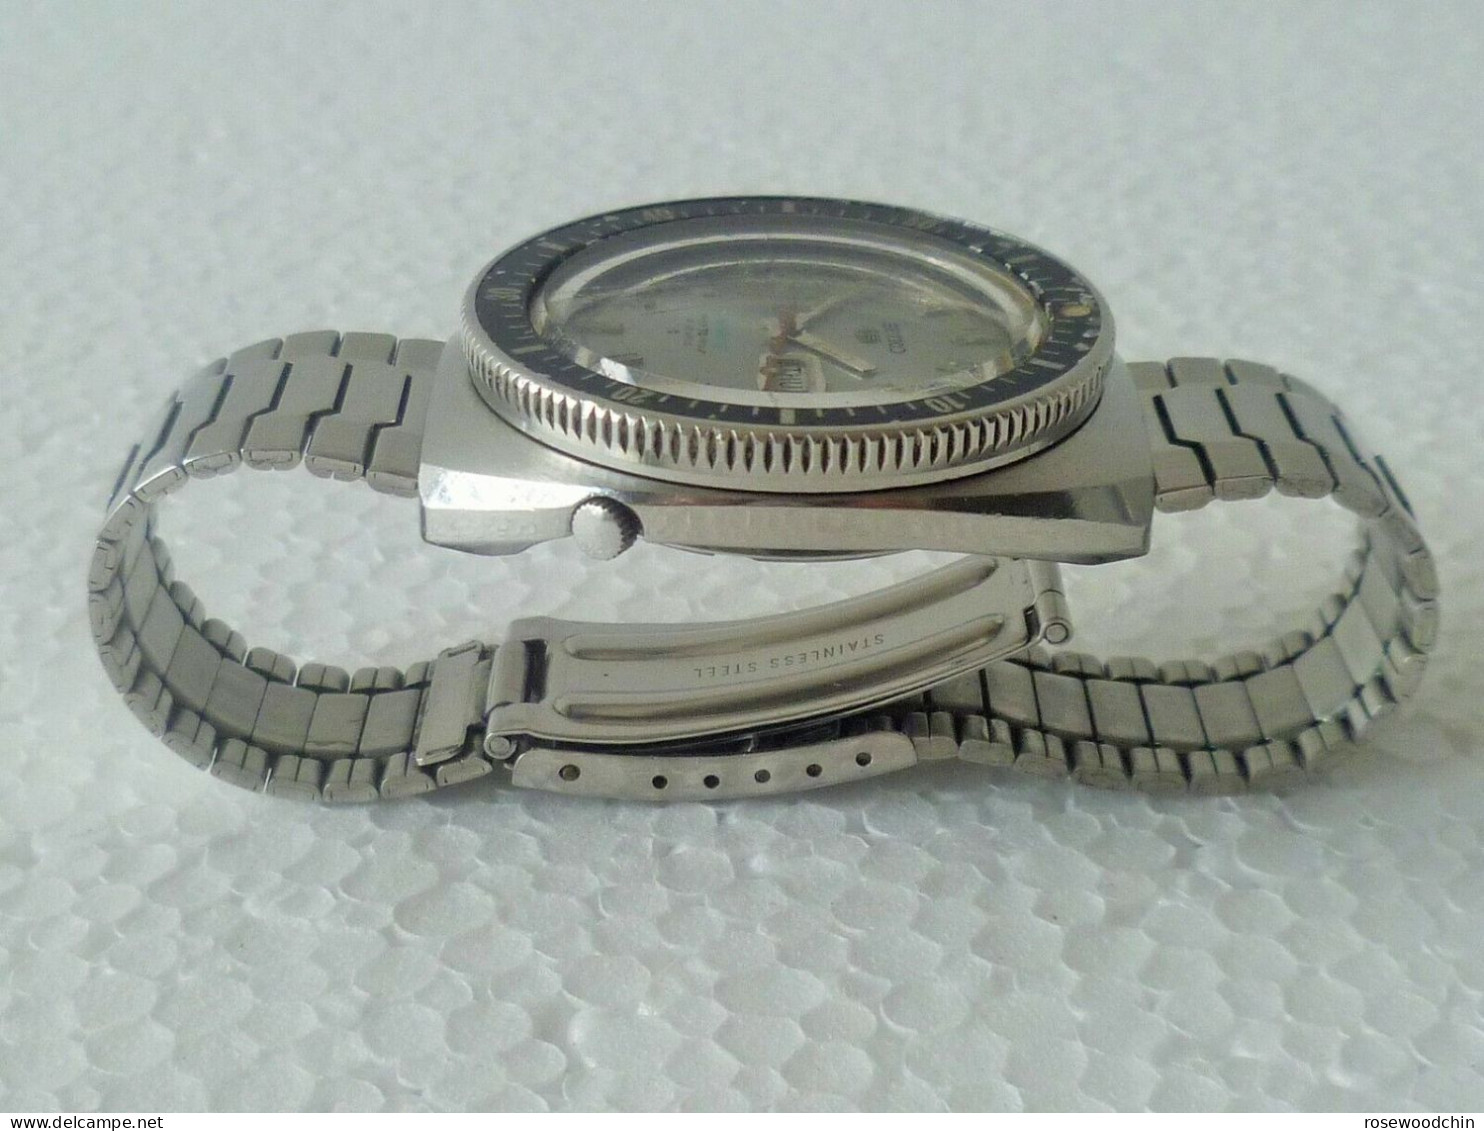 VINTAGE !! 60s' SEIKO 5 SPORTS Diver 6119-8120 70M 21 Jewels Automatic Watch 39mm - Orologi Antichi